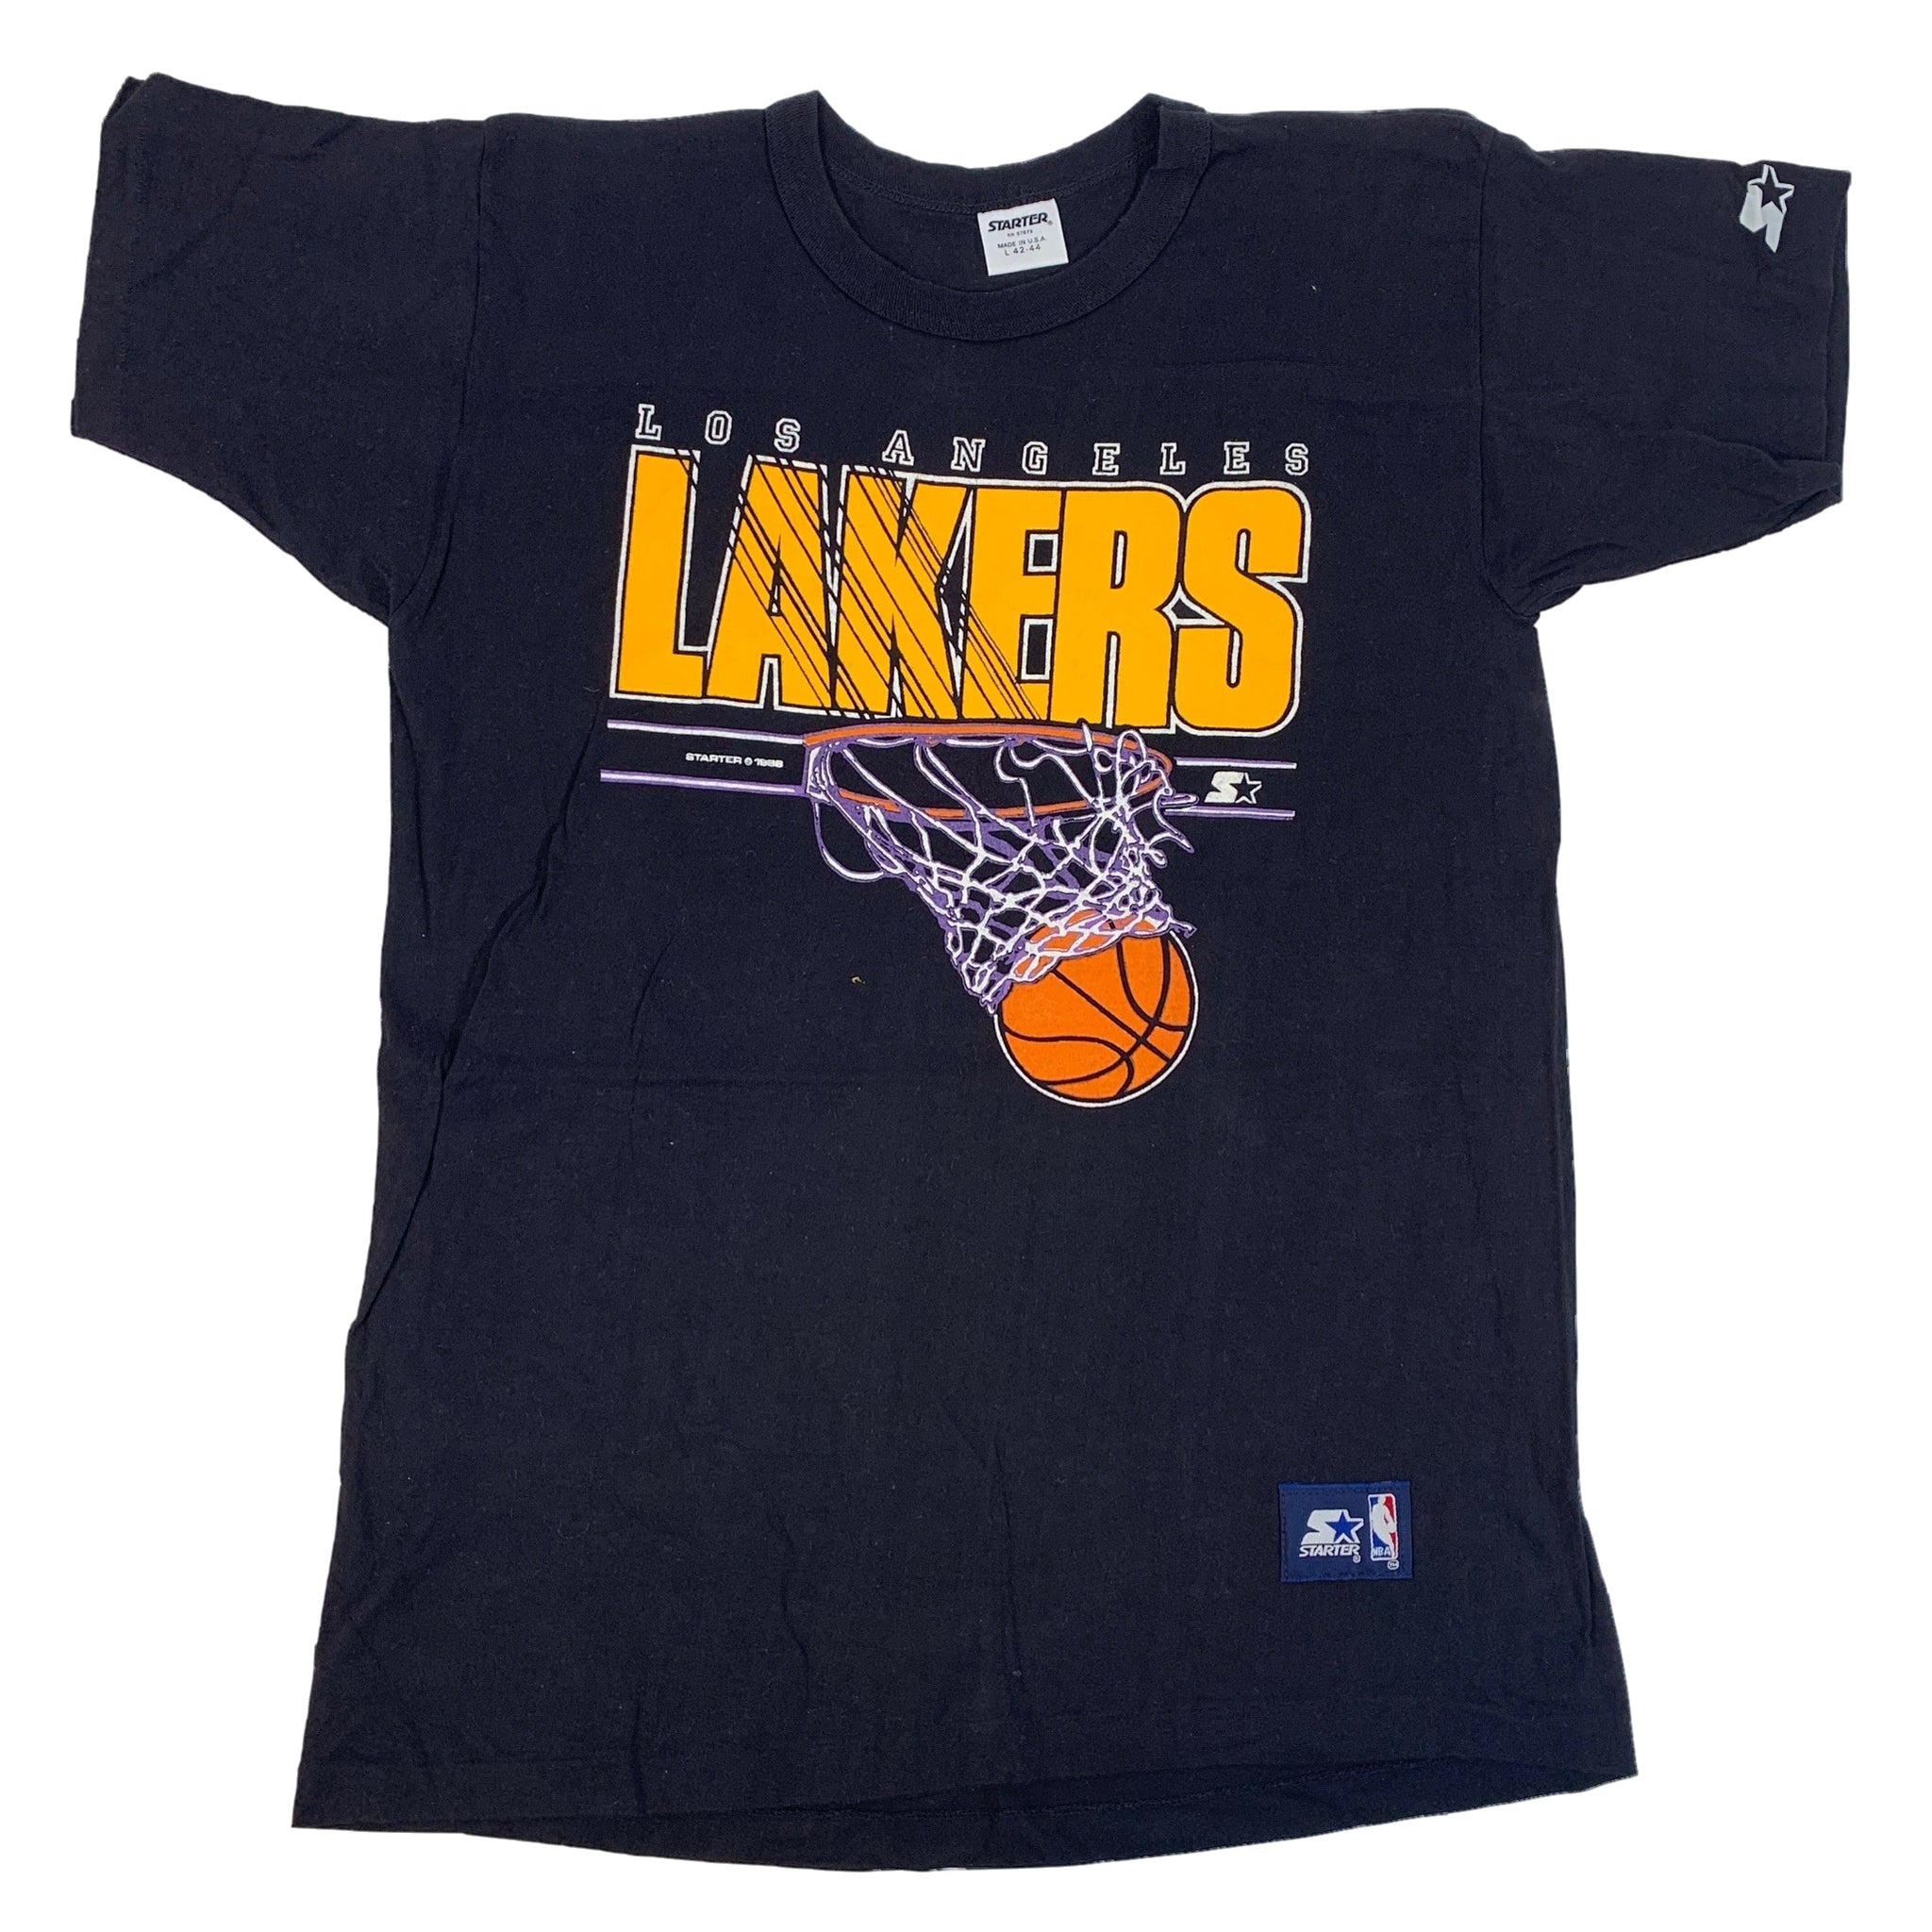 Vintage Lakers “Starter” T-Shirt